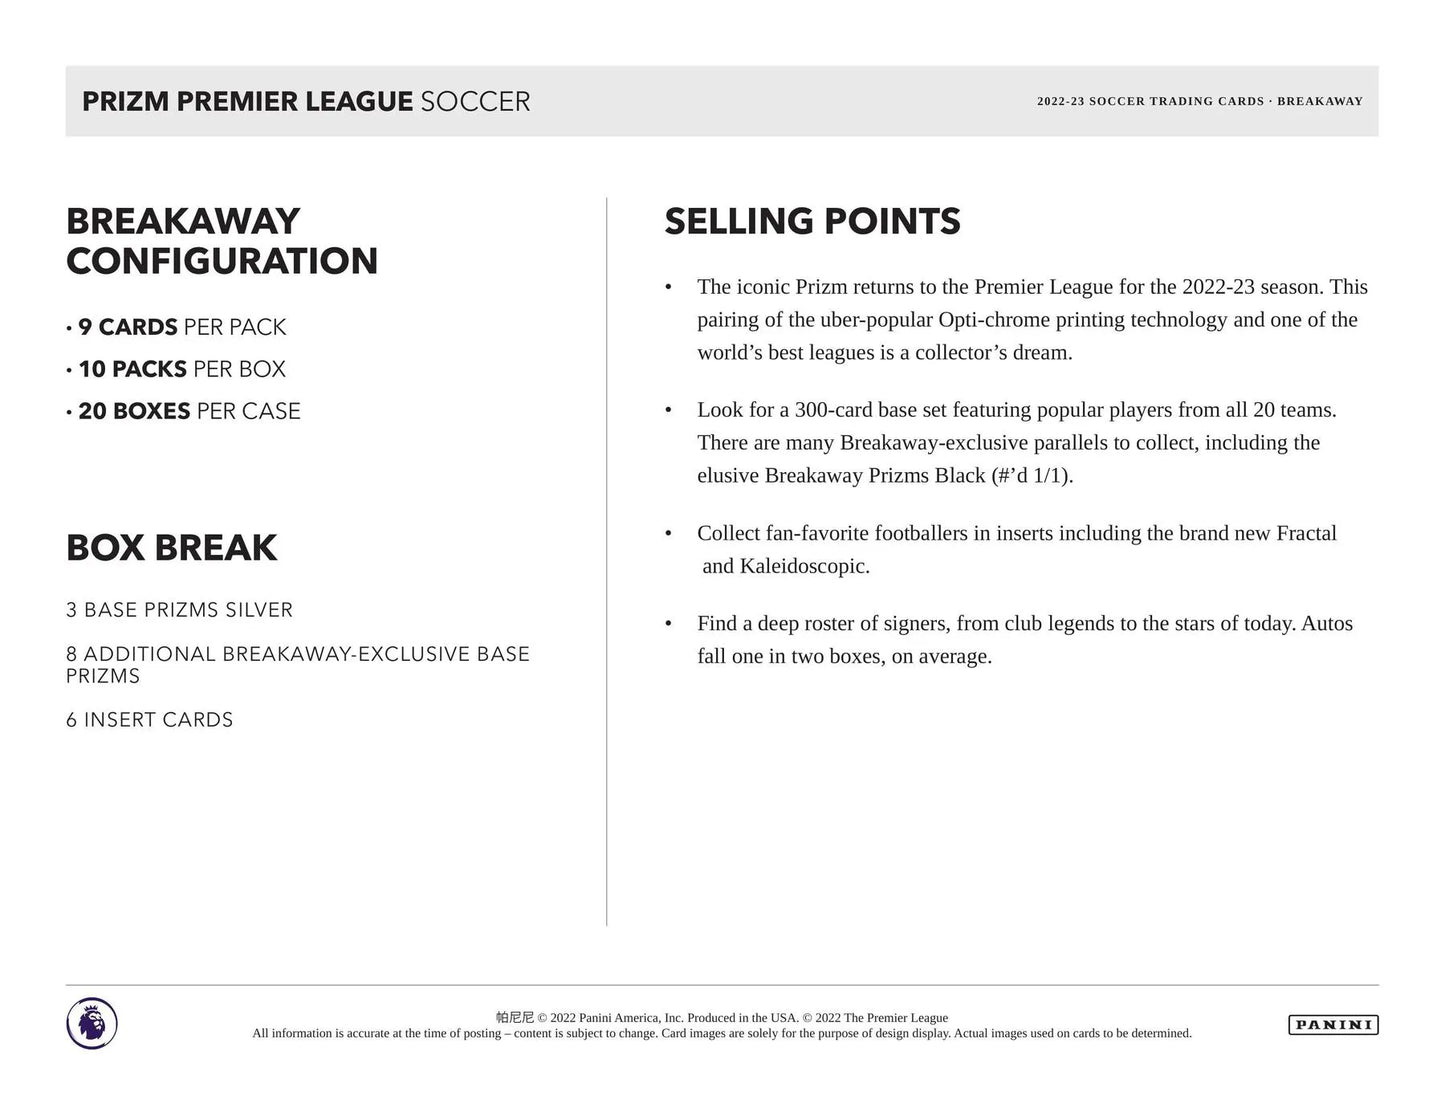 2022/23 Panini Prizm Premier League EPL Soccer Breakaway Pack